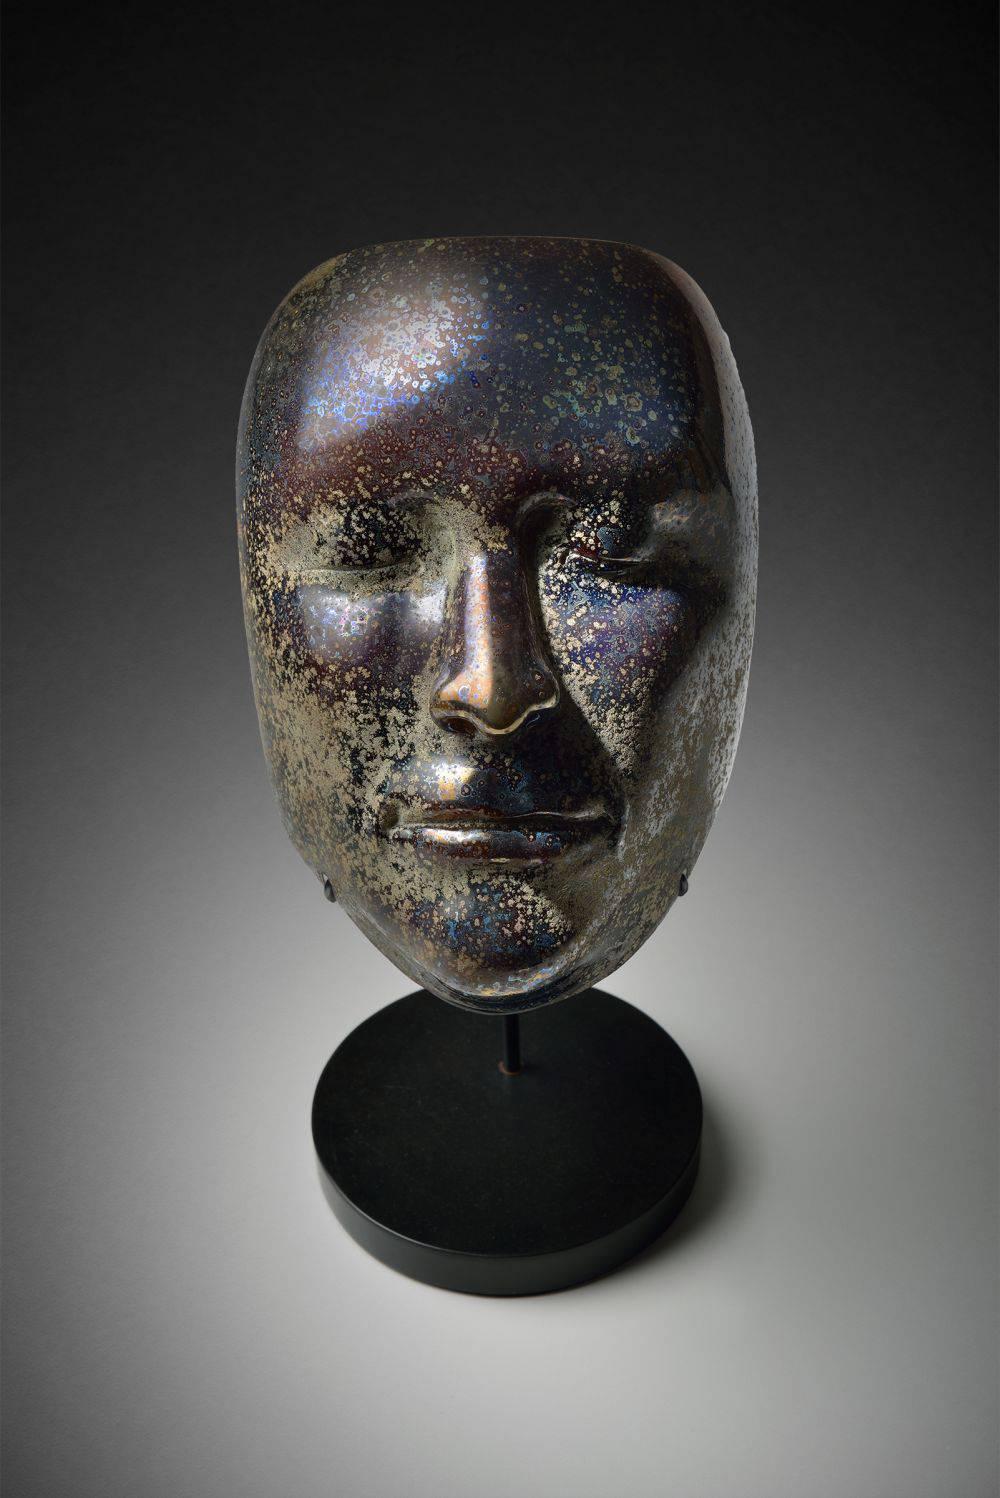 Ross Richmond Figurative Sculpture - "Of Earth and Sky" - hand-blown glass sculpture of a human face